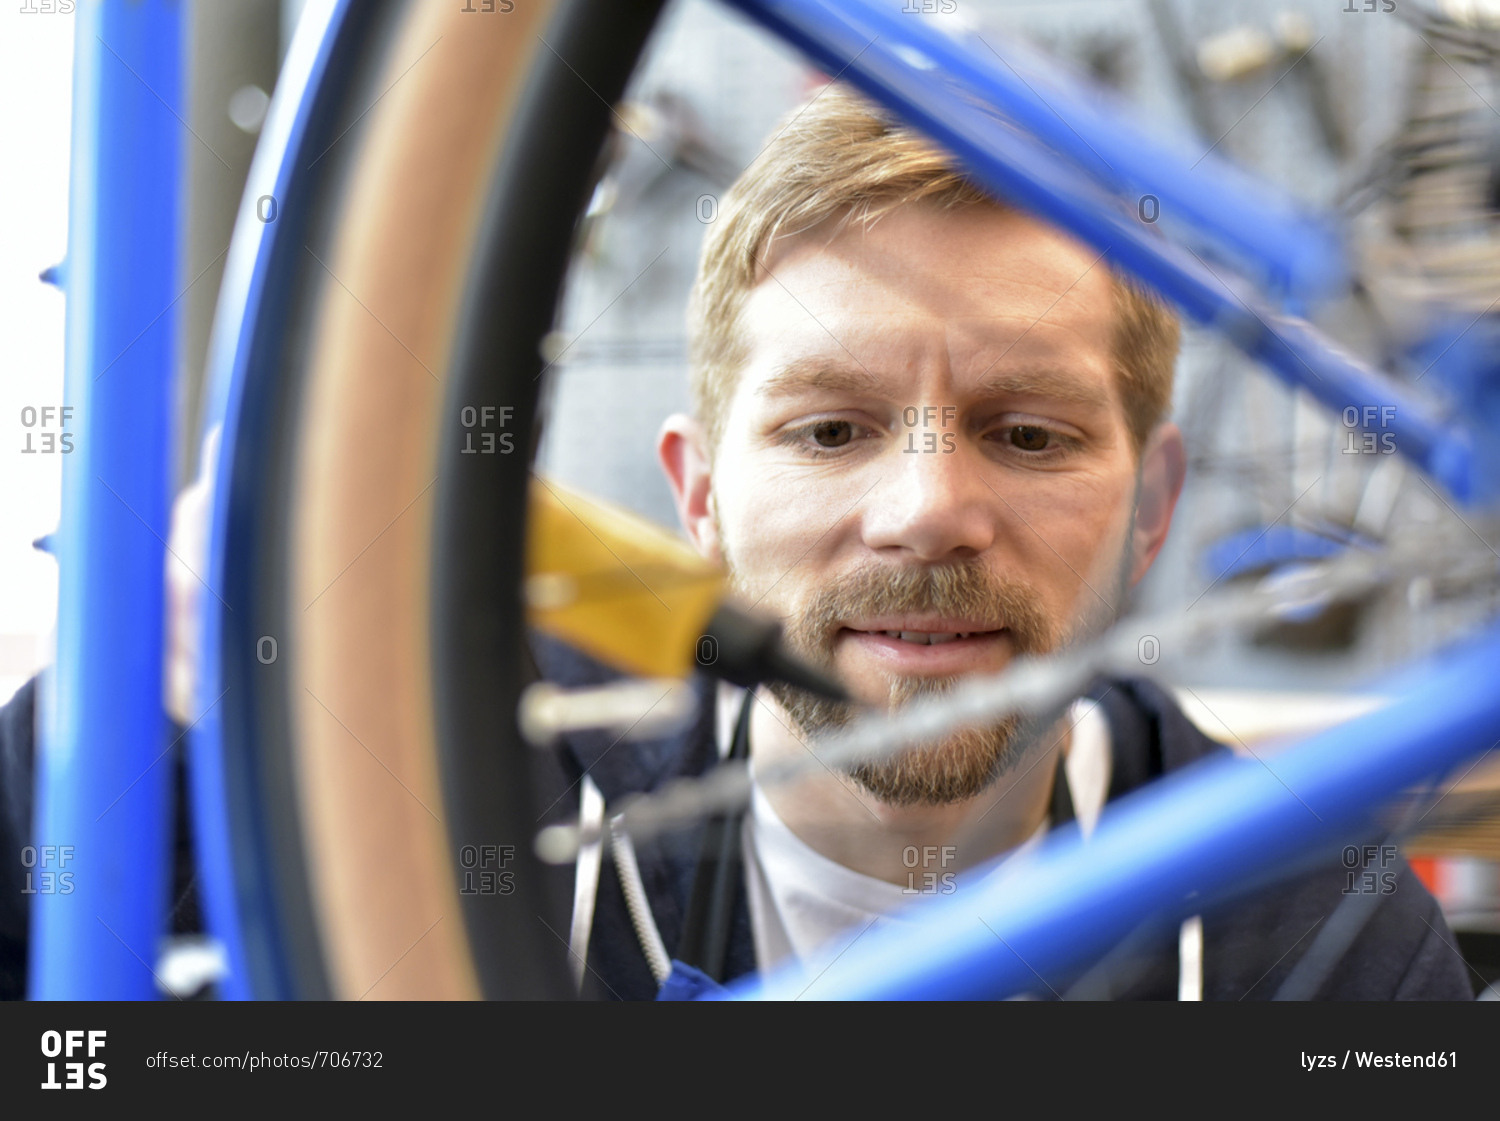 Bicycle mechanic lubricating bicycle chain